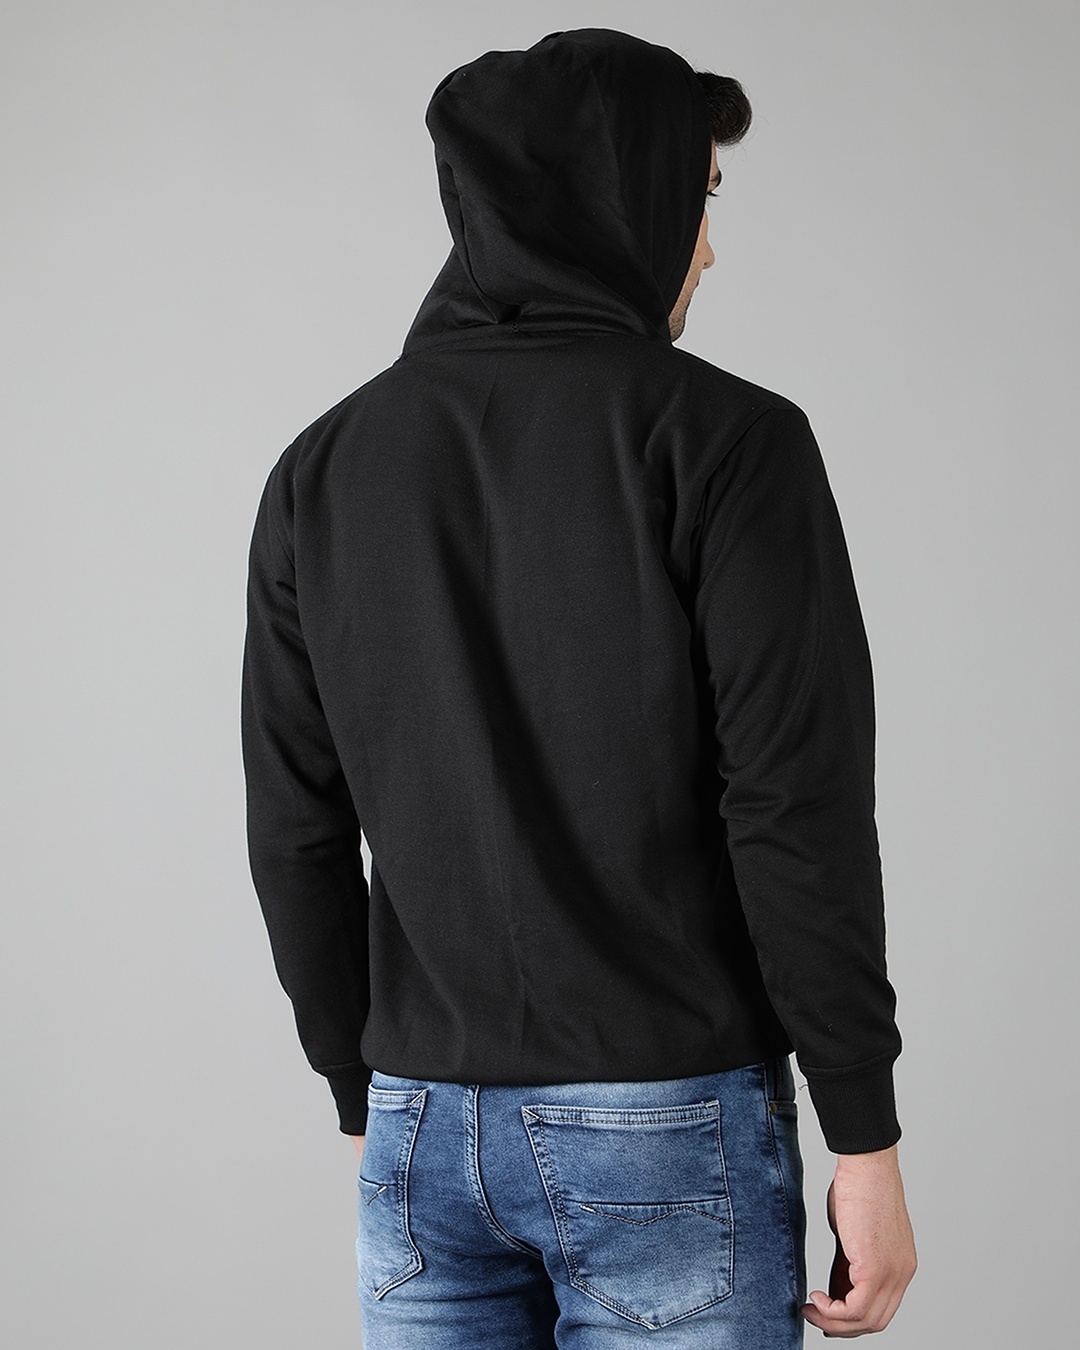 Shop Men's Black Blah Blah Hoodie Sweatshirt-Design